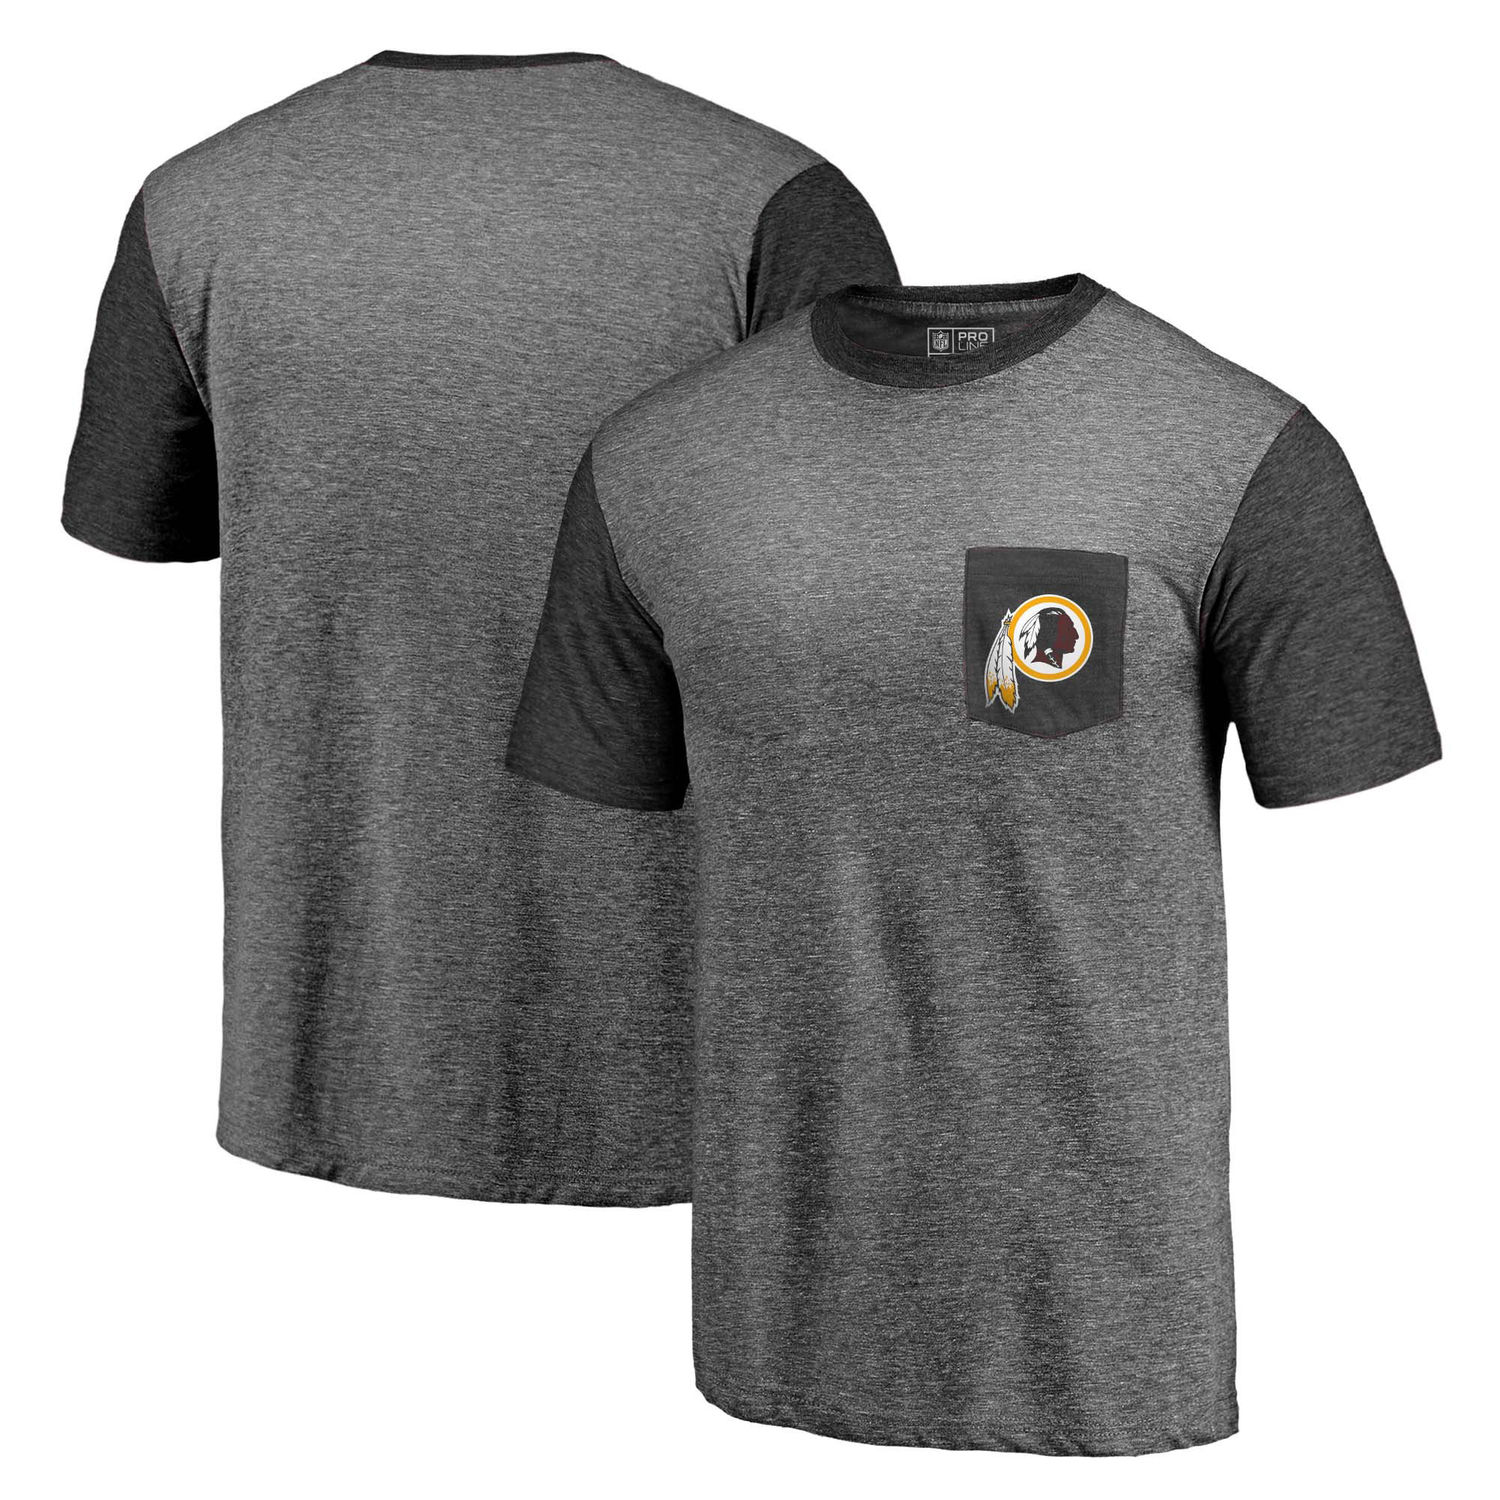 Men's Washington Redskins Pro Line by Fanatics Branded Heathered Gray-Black Refresh Pocket T-Shirt